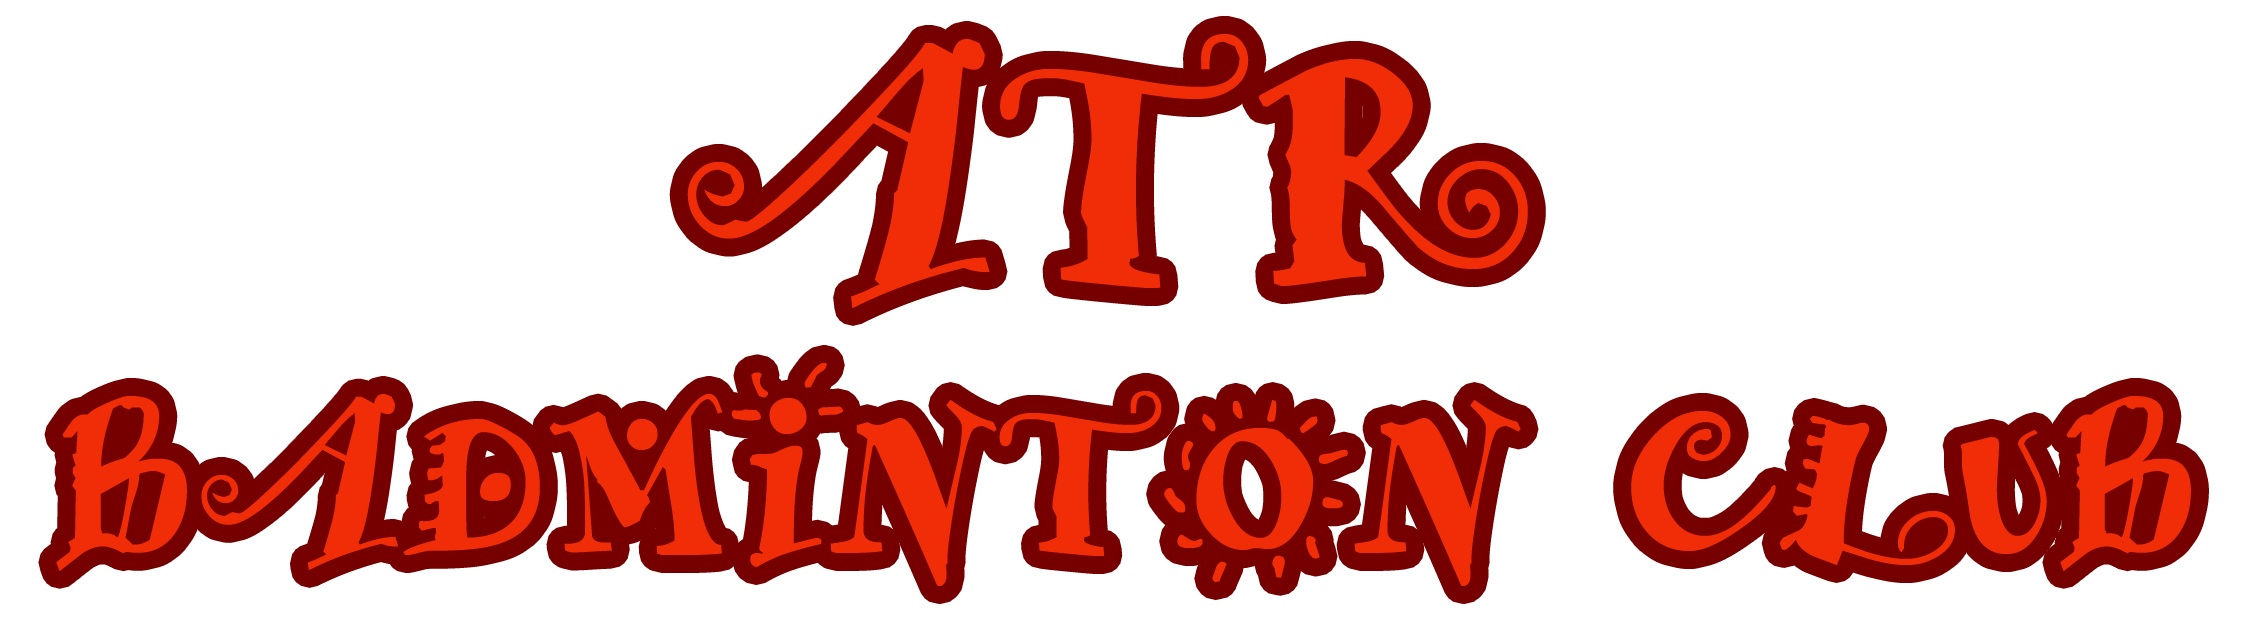 ATR Badominton Club since 2000